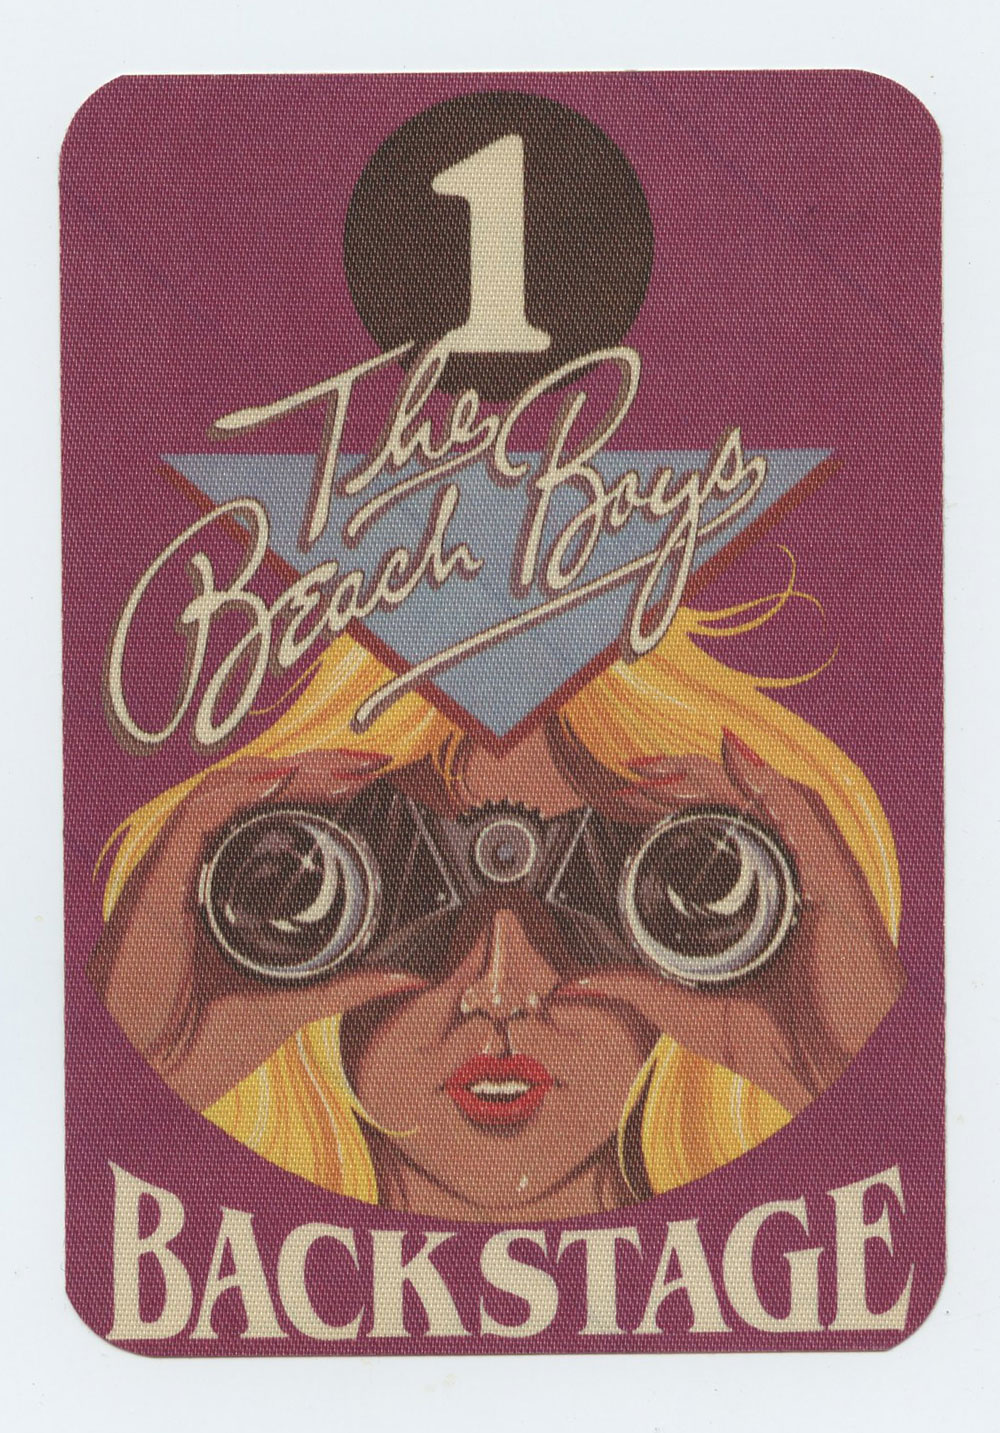 The Beach Boys Backstage Pass Bad Vibrations Tour 1982 